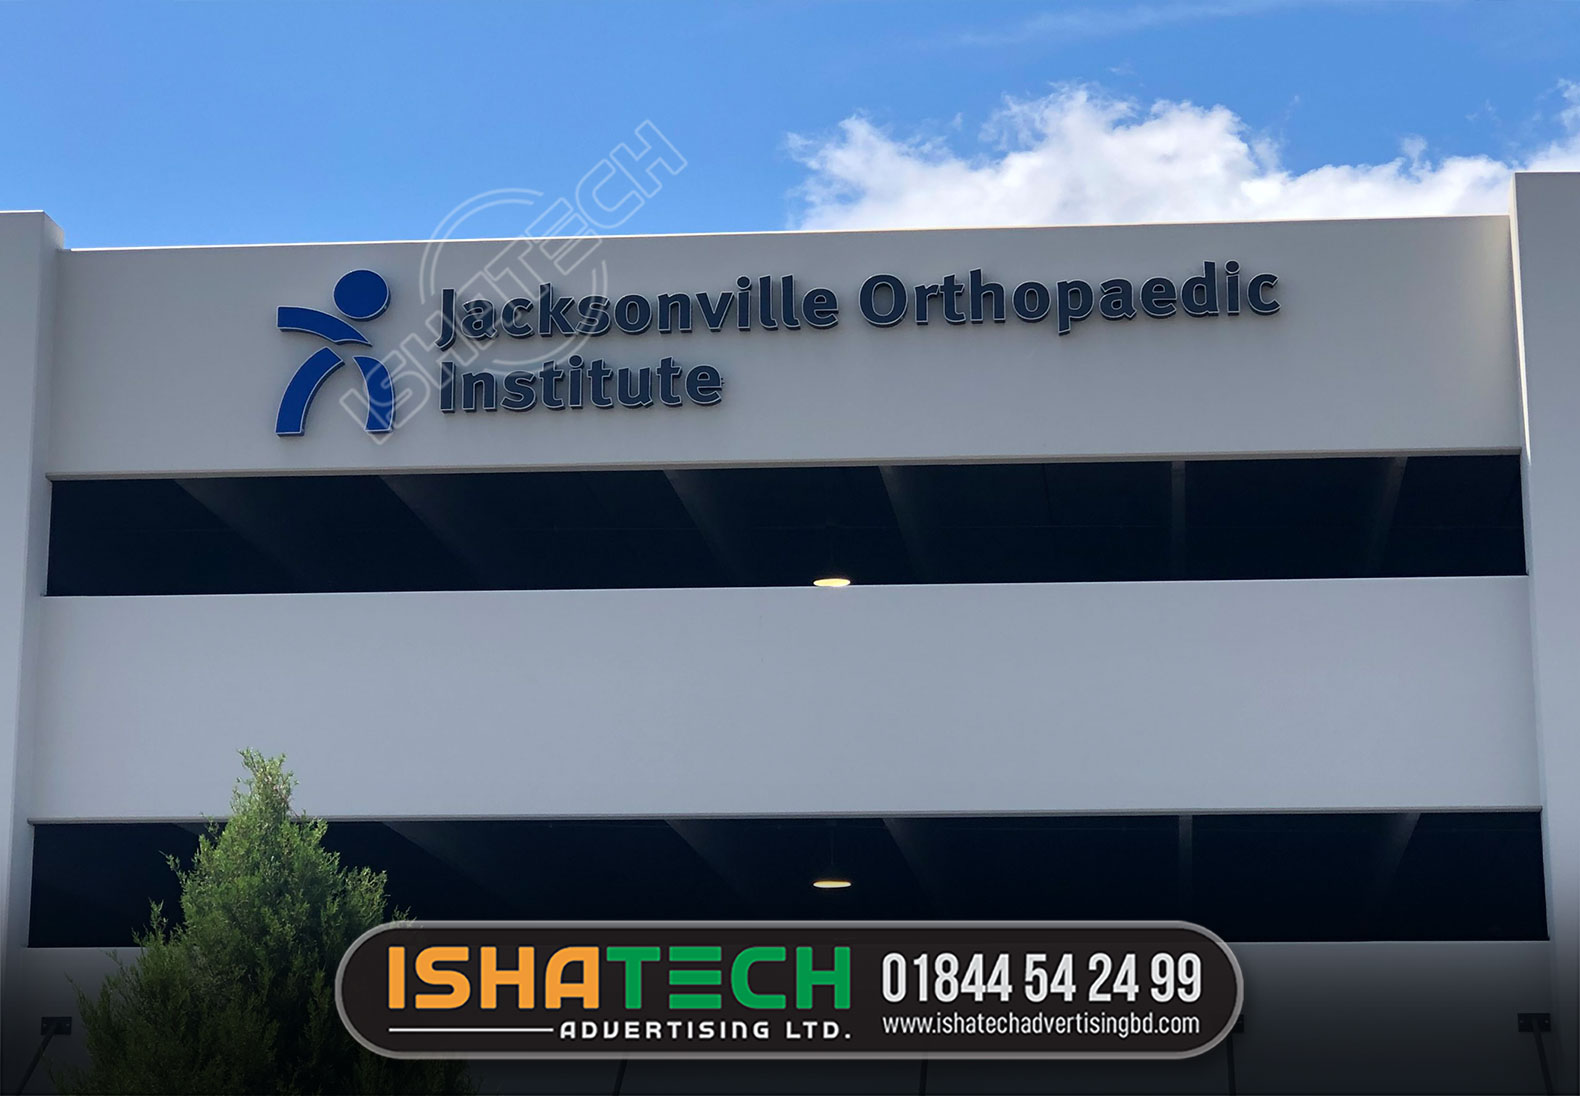 JACKSONVILLE ORTHOPAEDIC INSTITUTE HOSPITAL NAME PLATE MAKING BY ISHATECH ADVERTISING LTD